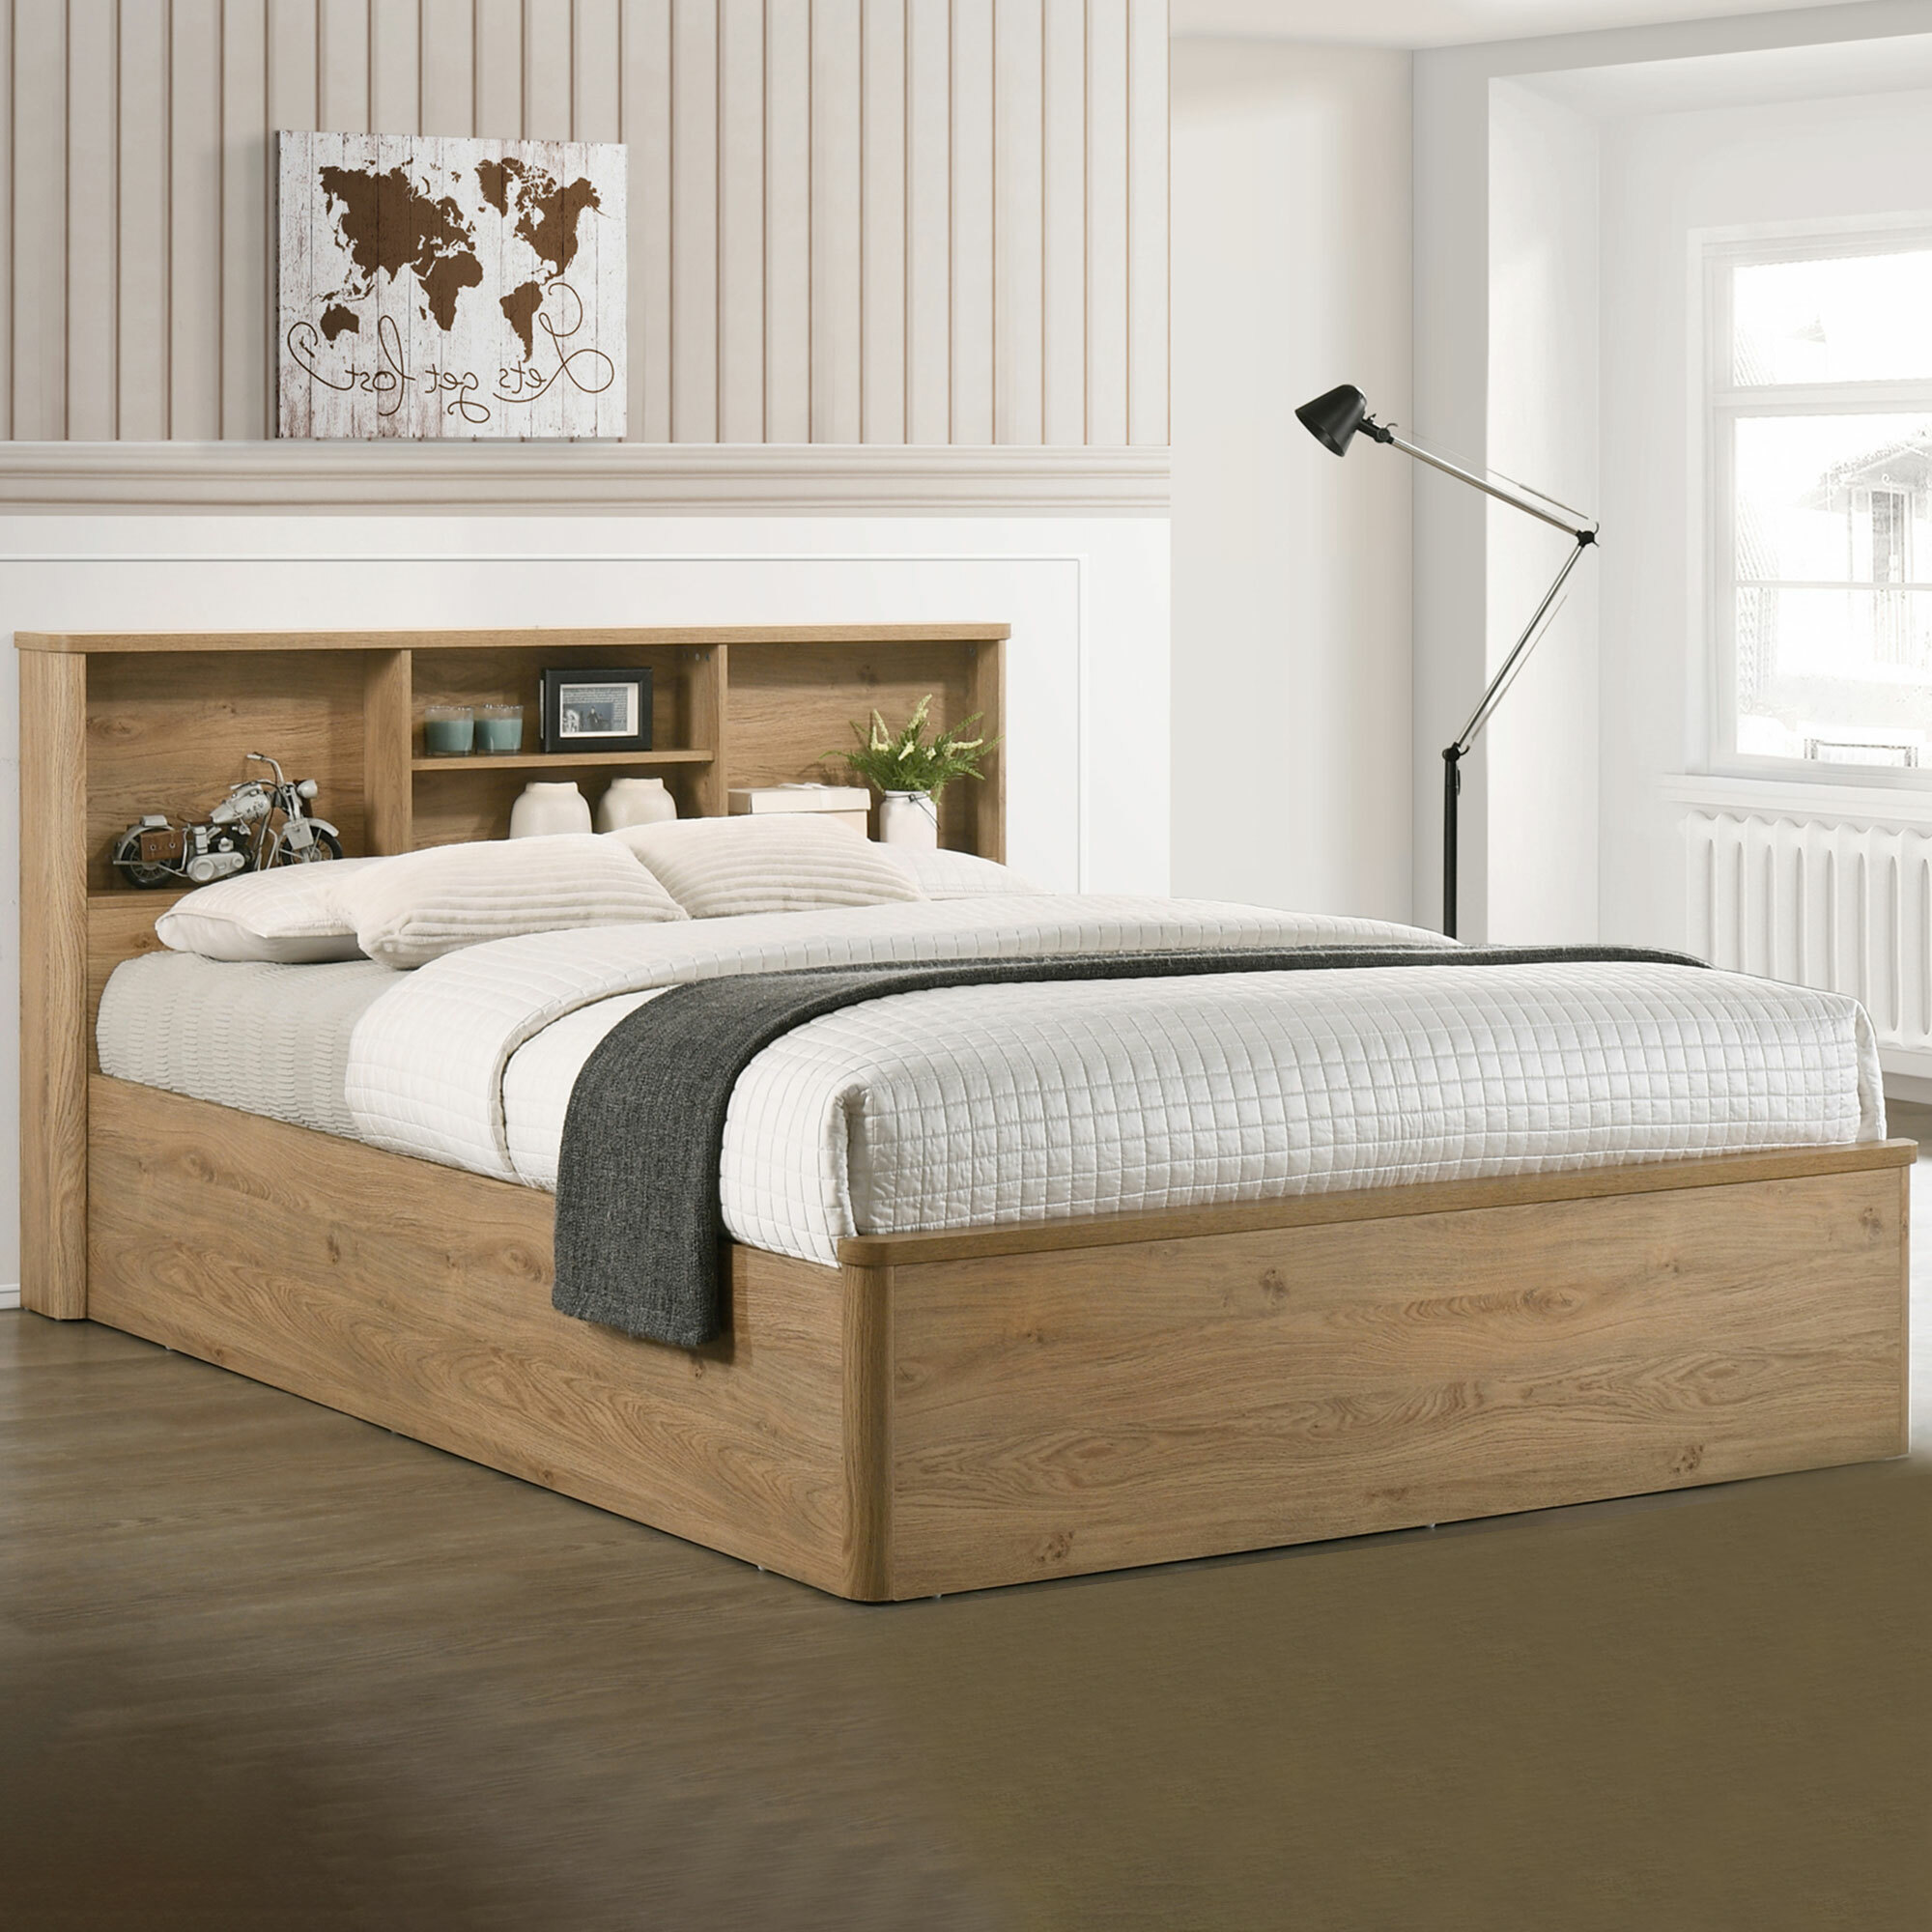 Core Living Natural Anderson Queen Bed, Queen Size Headboard